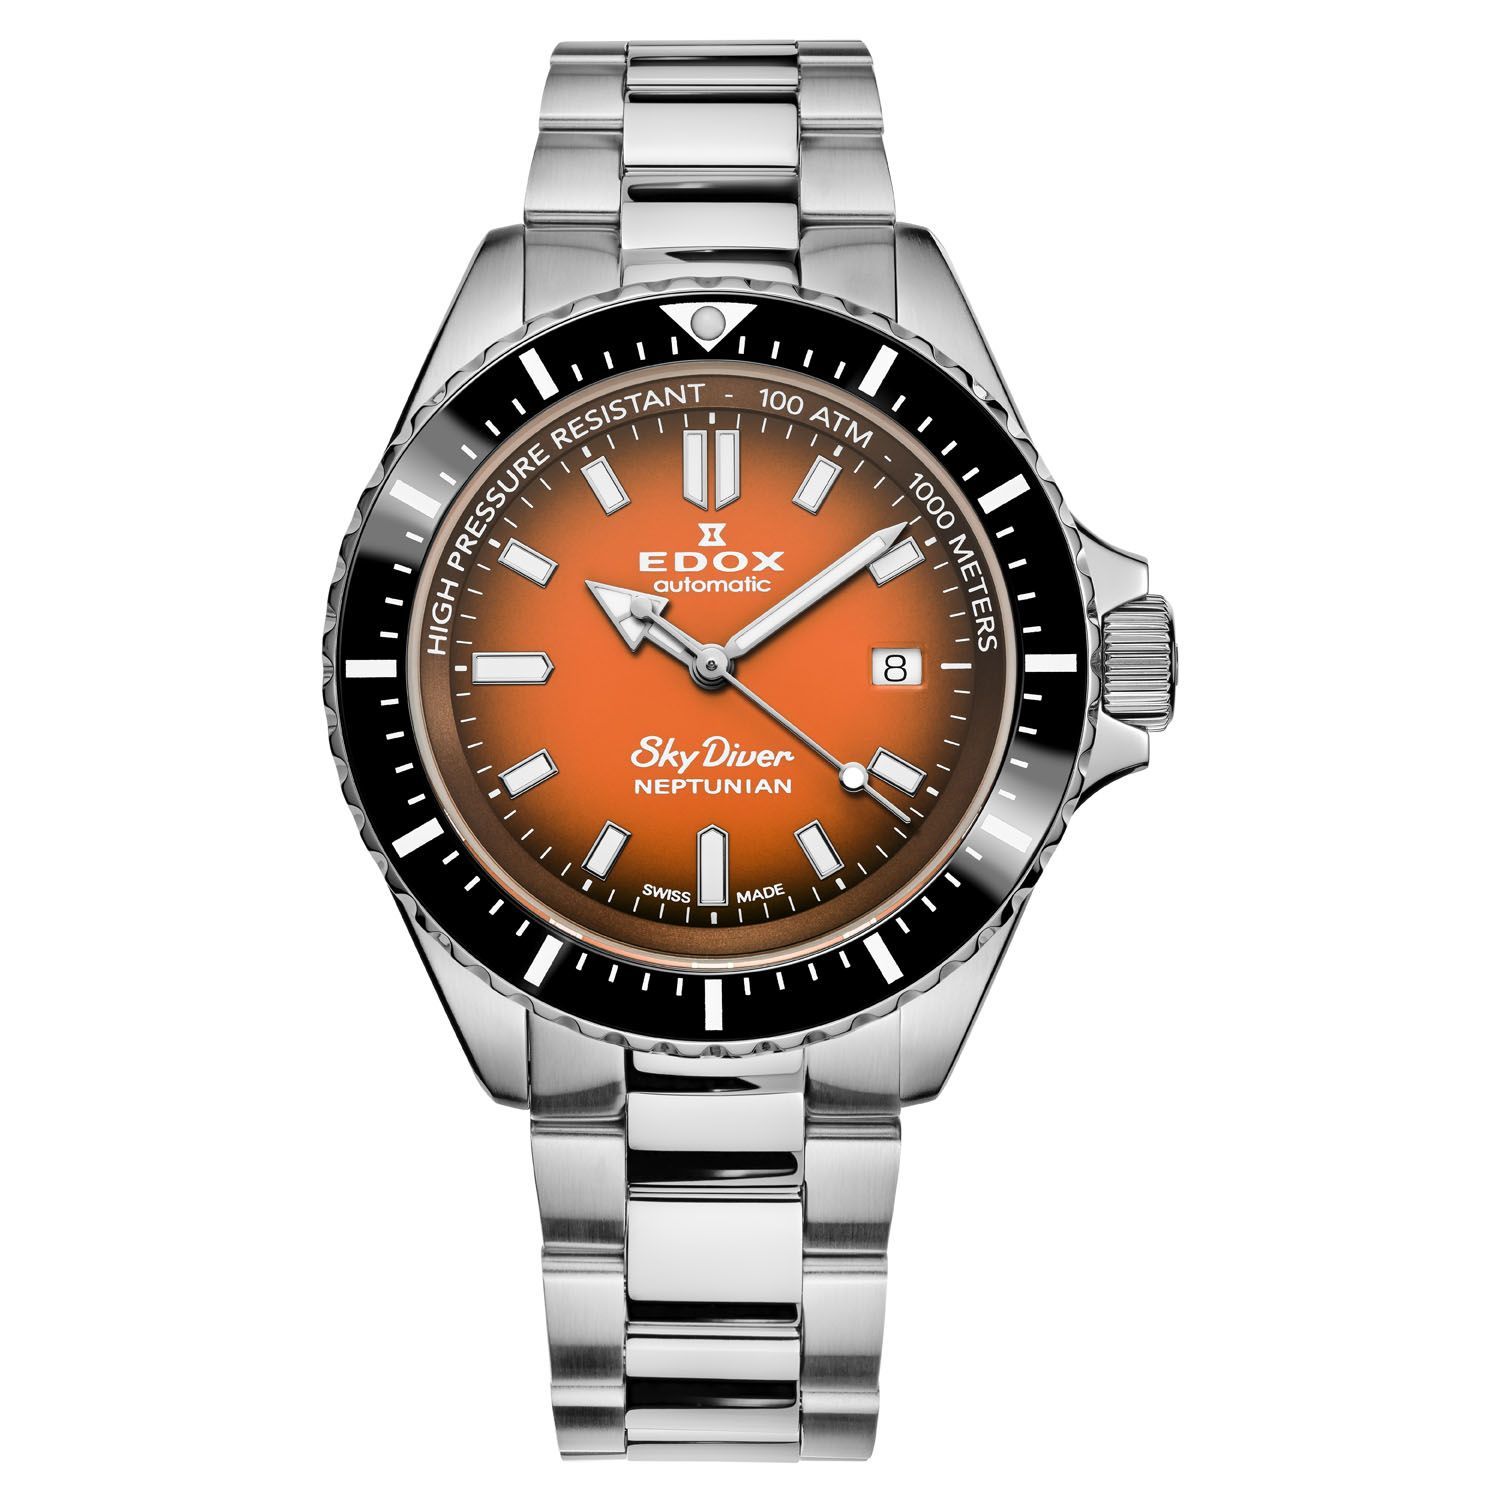 Silver Edox Watch With An Orange Face — Watch Shop on the Sunshine Coast